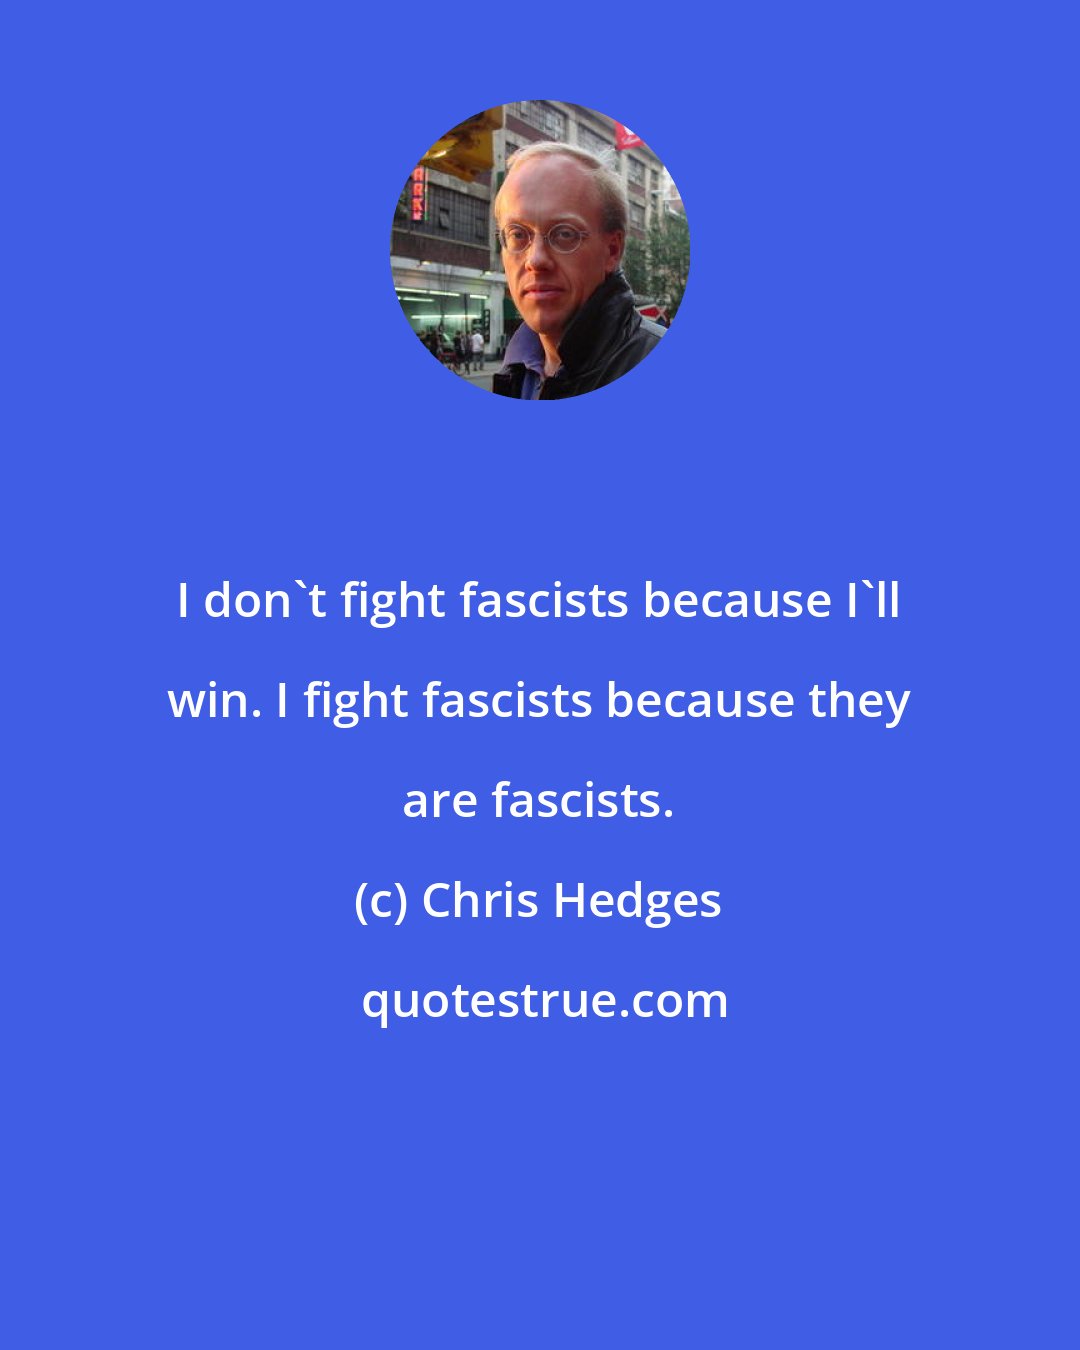 Chris Hedges: I don't fight fascists because I'll win. I fight fascists because they are fascists.